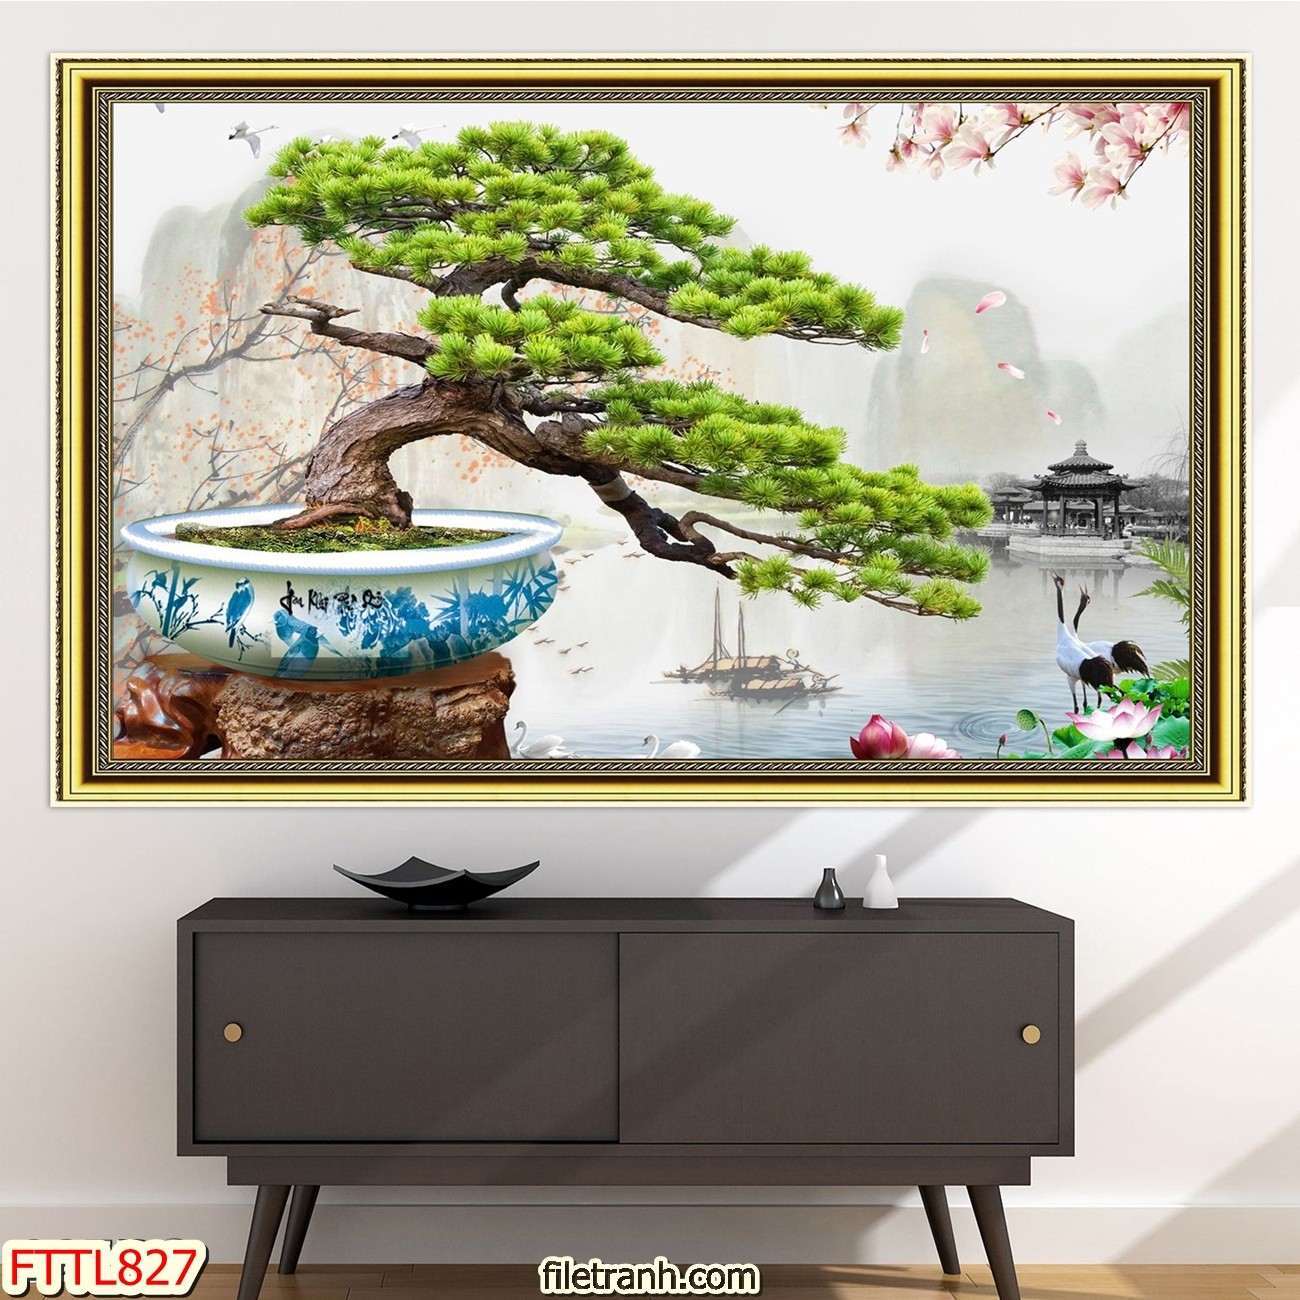 https://filetranh.com/file-tranh-chau-mai-bonsai/file-tranh-chau-mai-bonsai-fttl827.html